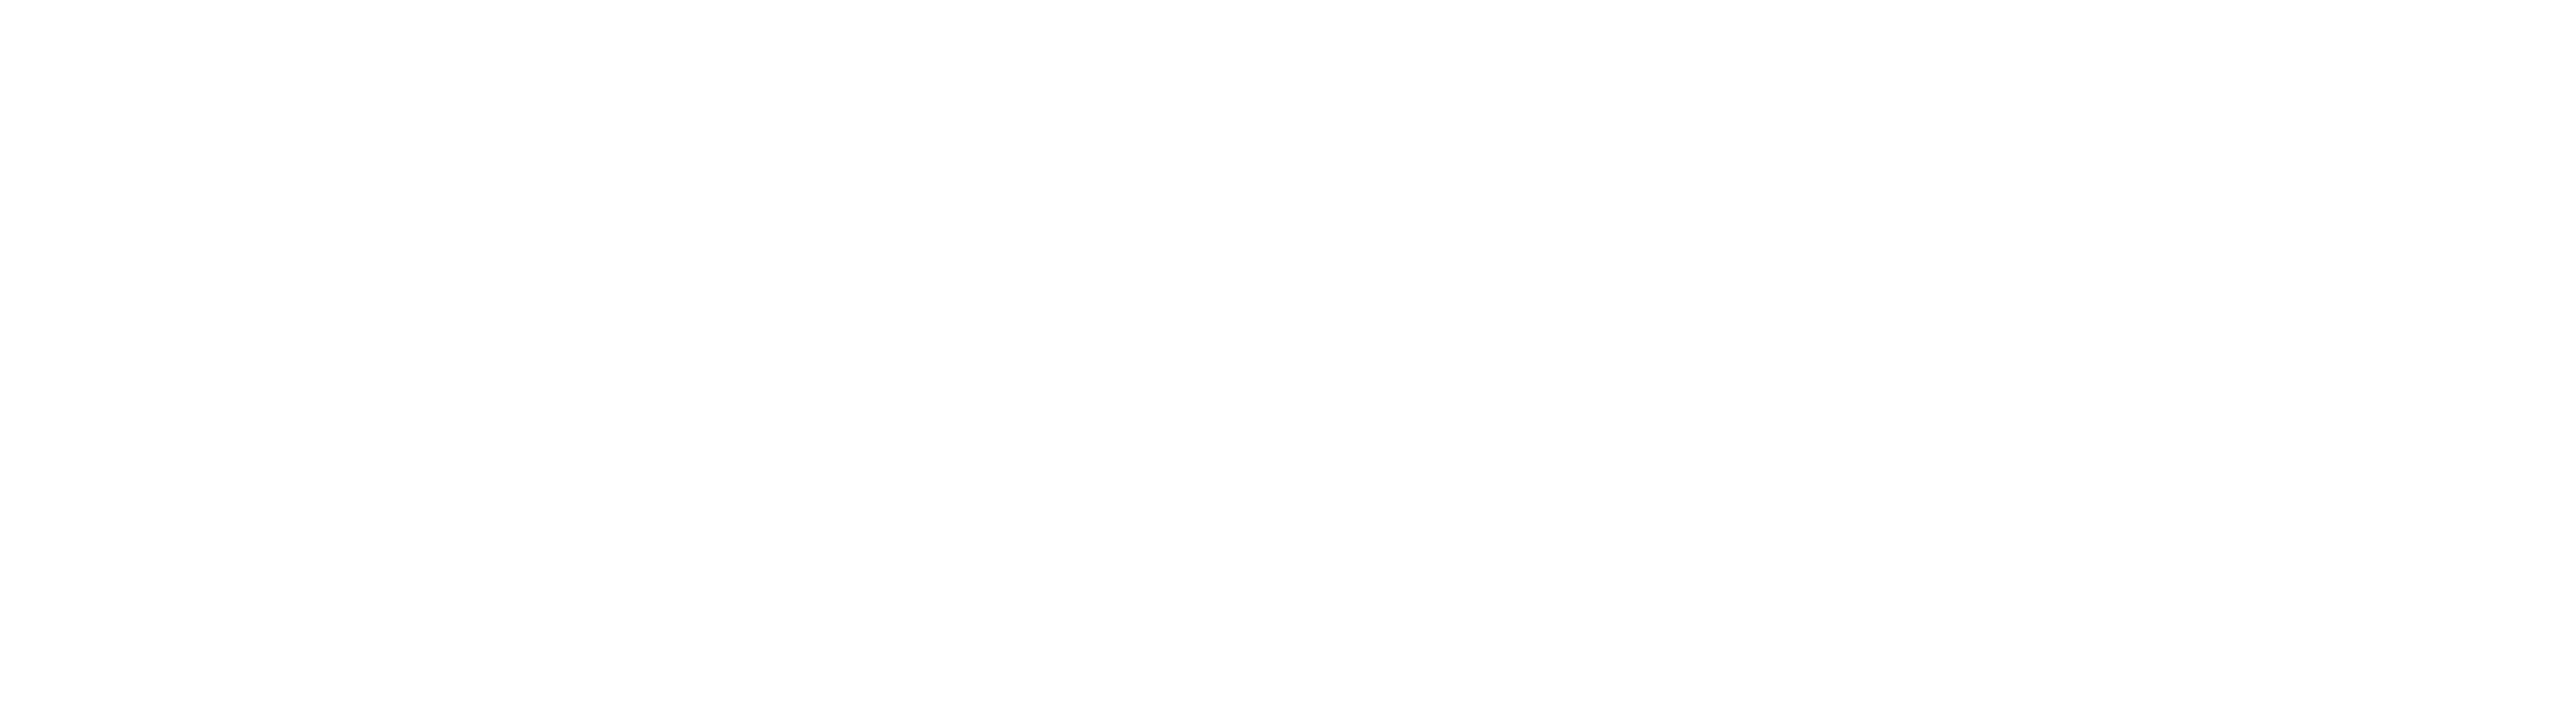 Aftalia-Solutions